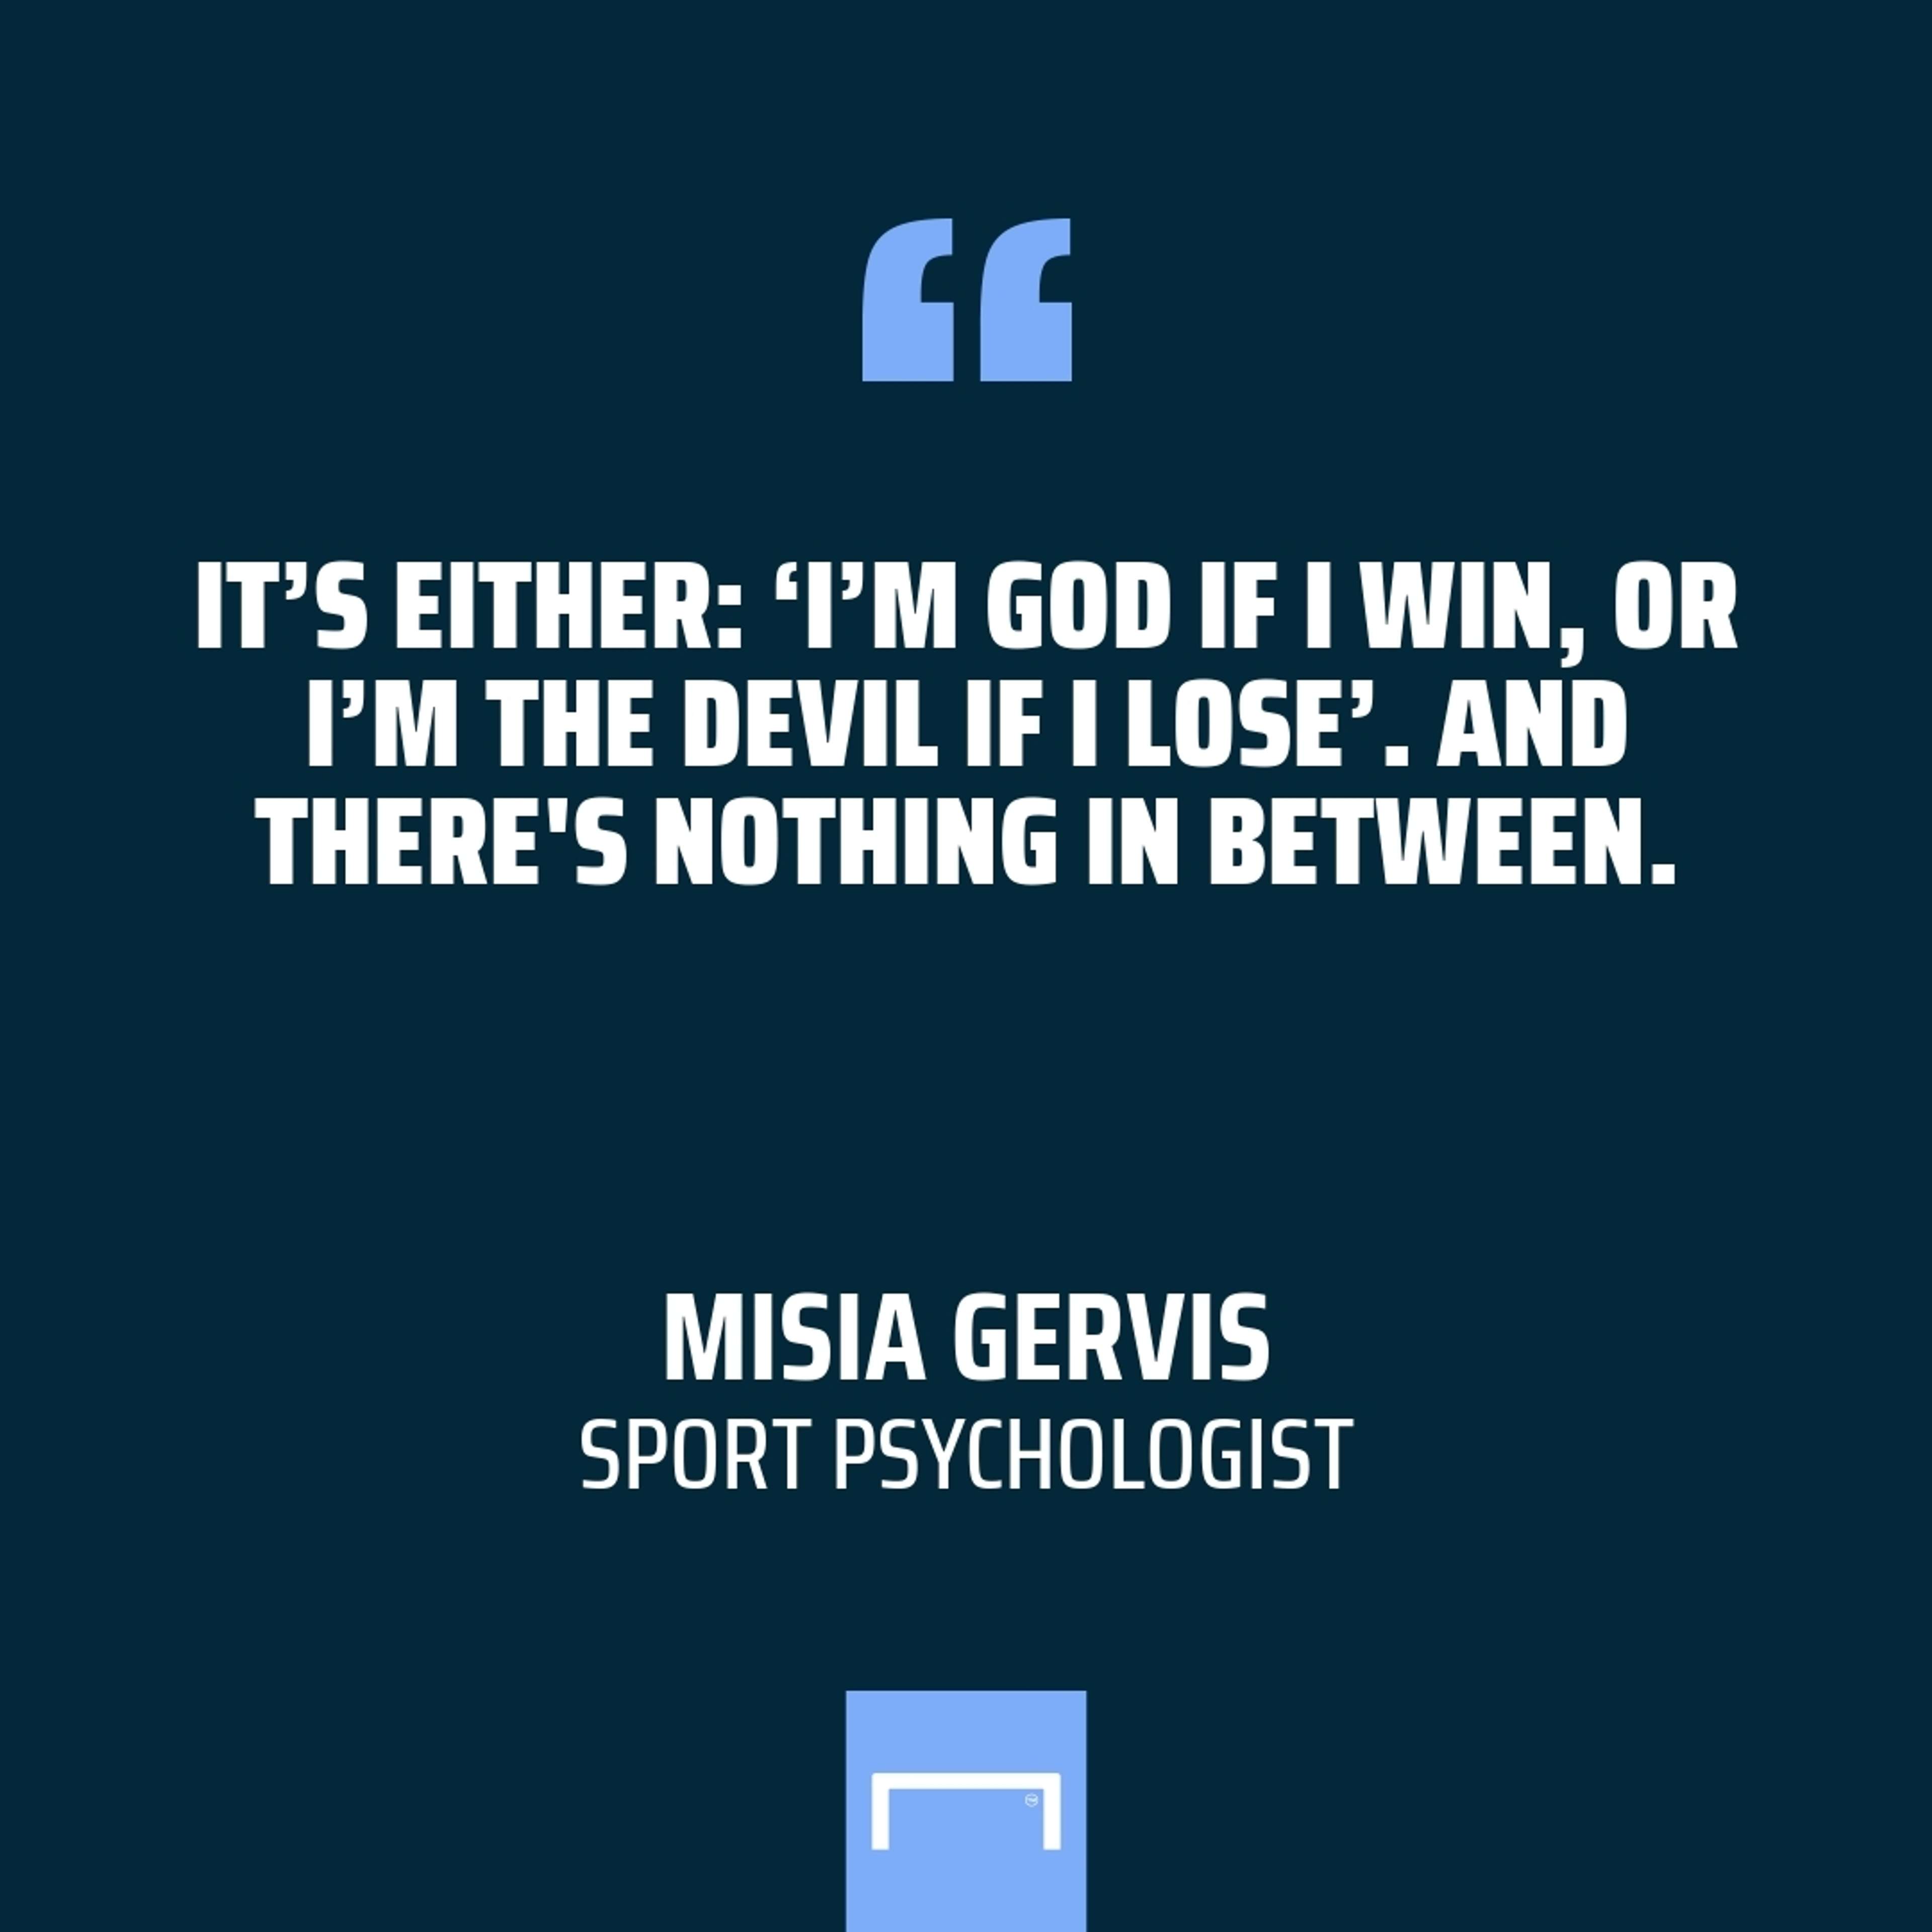 Misia Gervis quote GFX